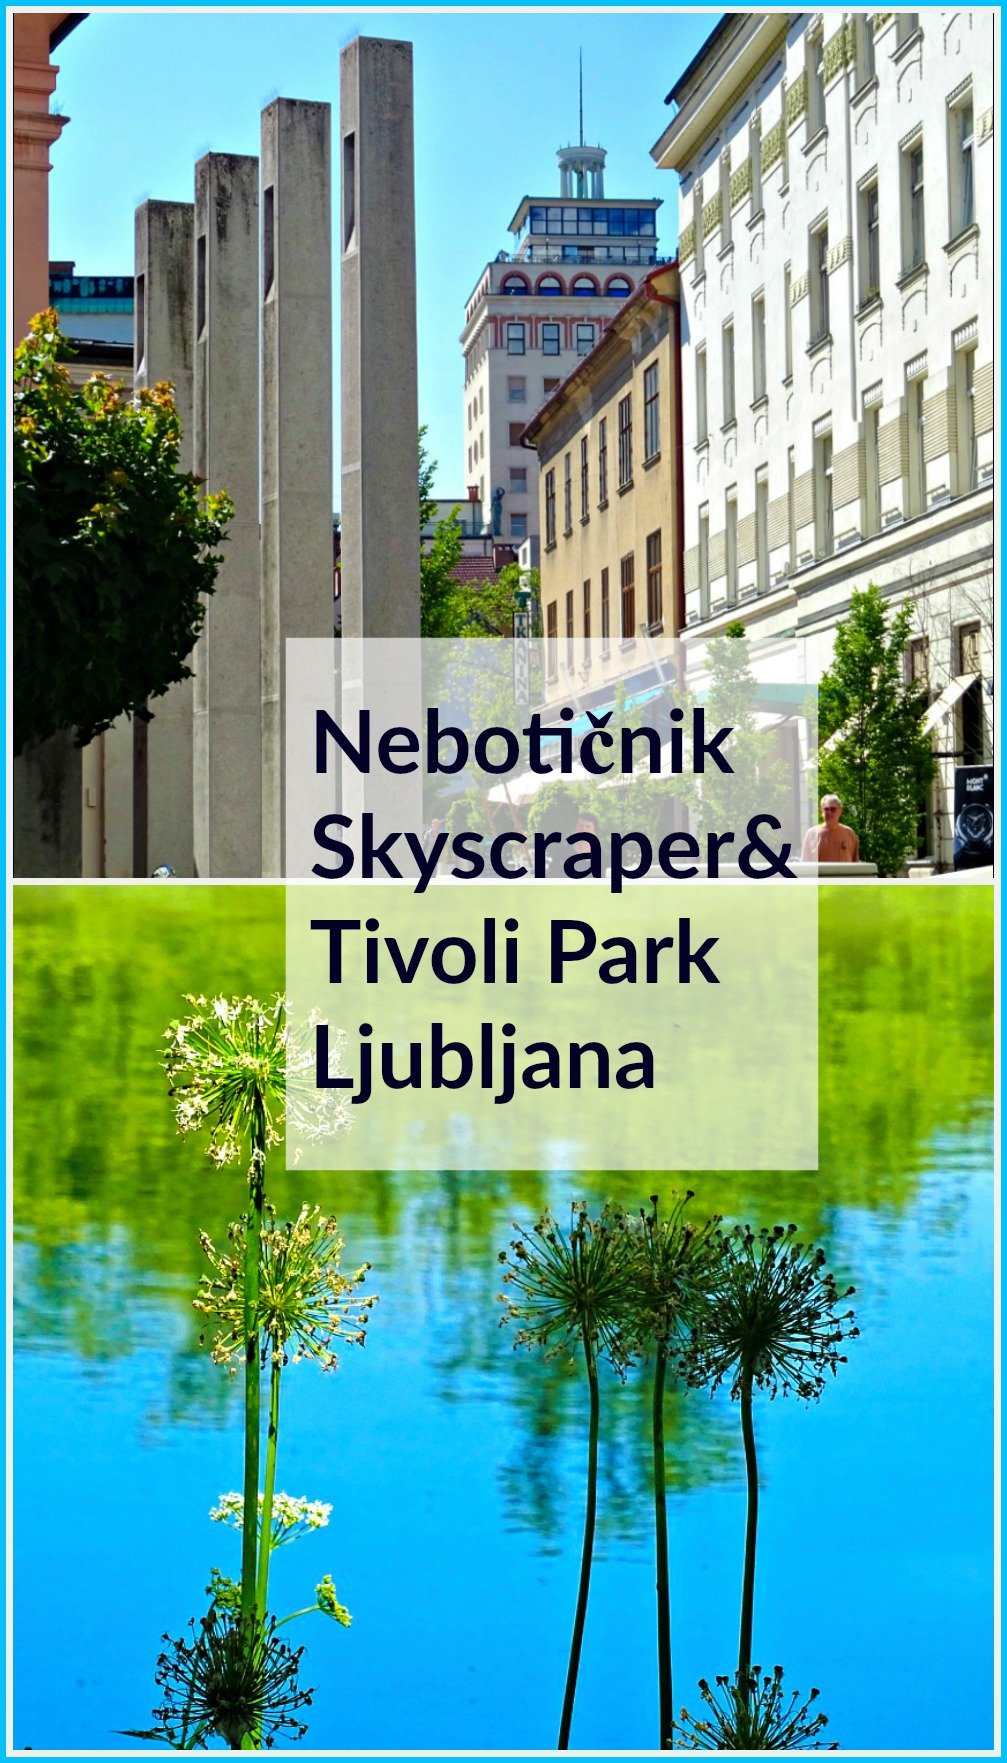 Nebotičnik skyscraper and a walk in the park in Ljubljana Slovenia